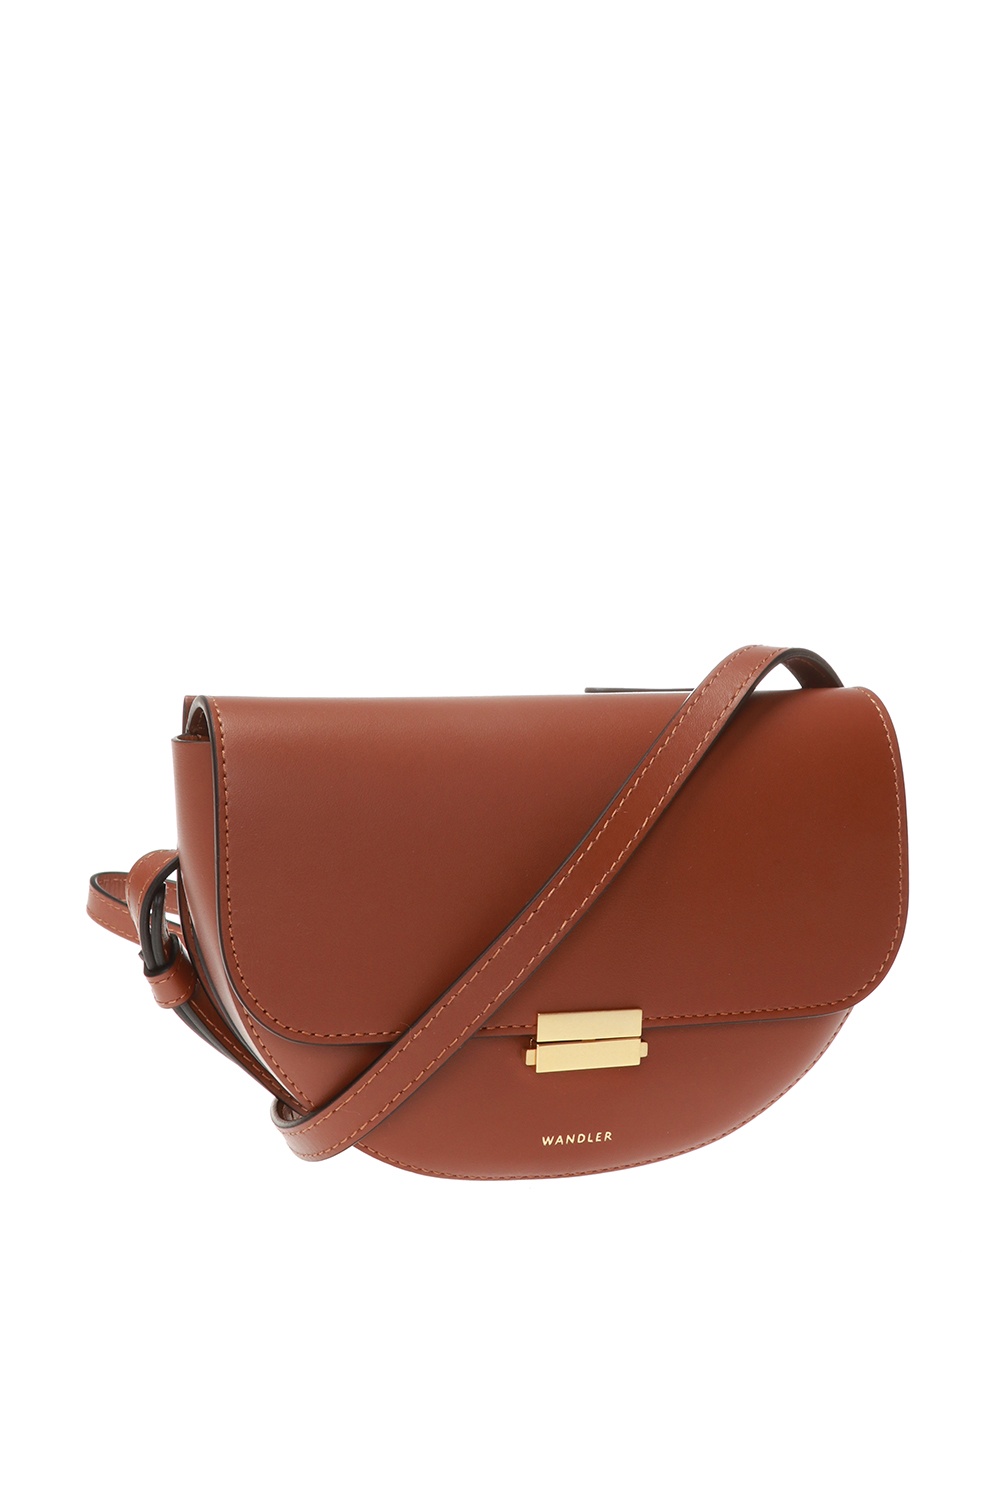 Anna's Items - Top grade belt bag Price:P1300 Size:10